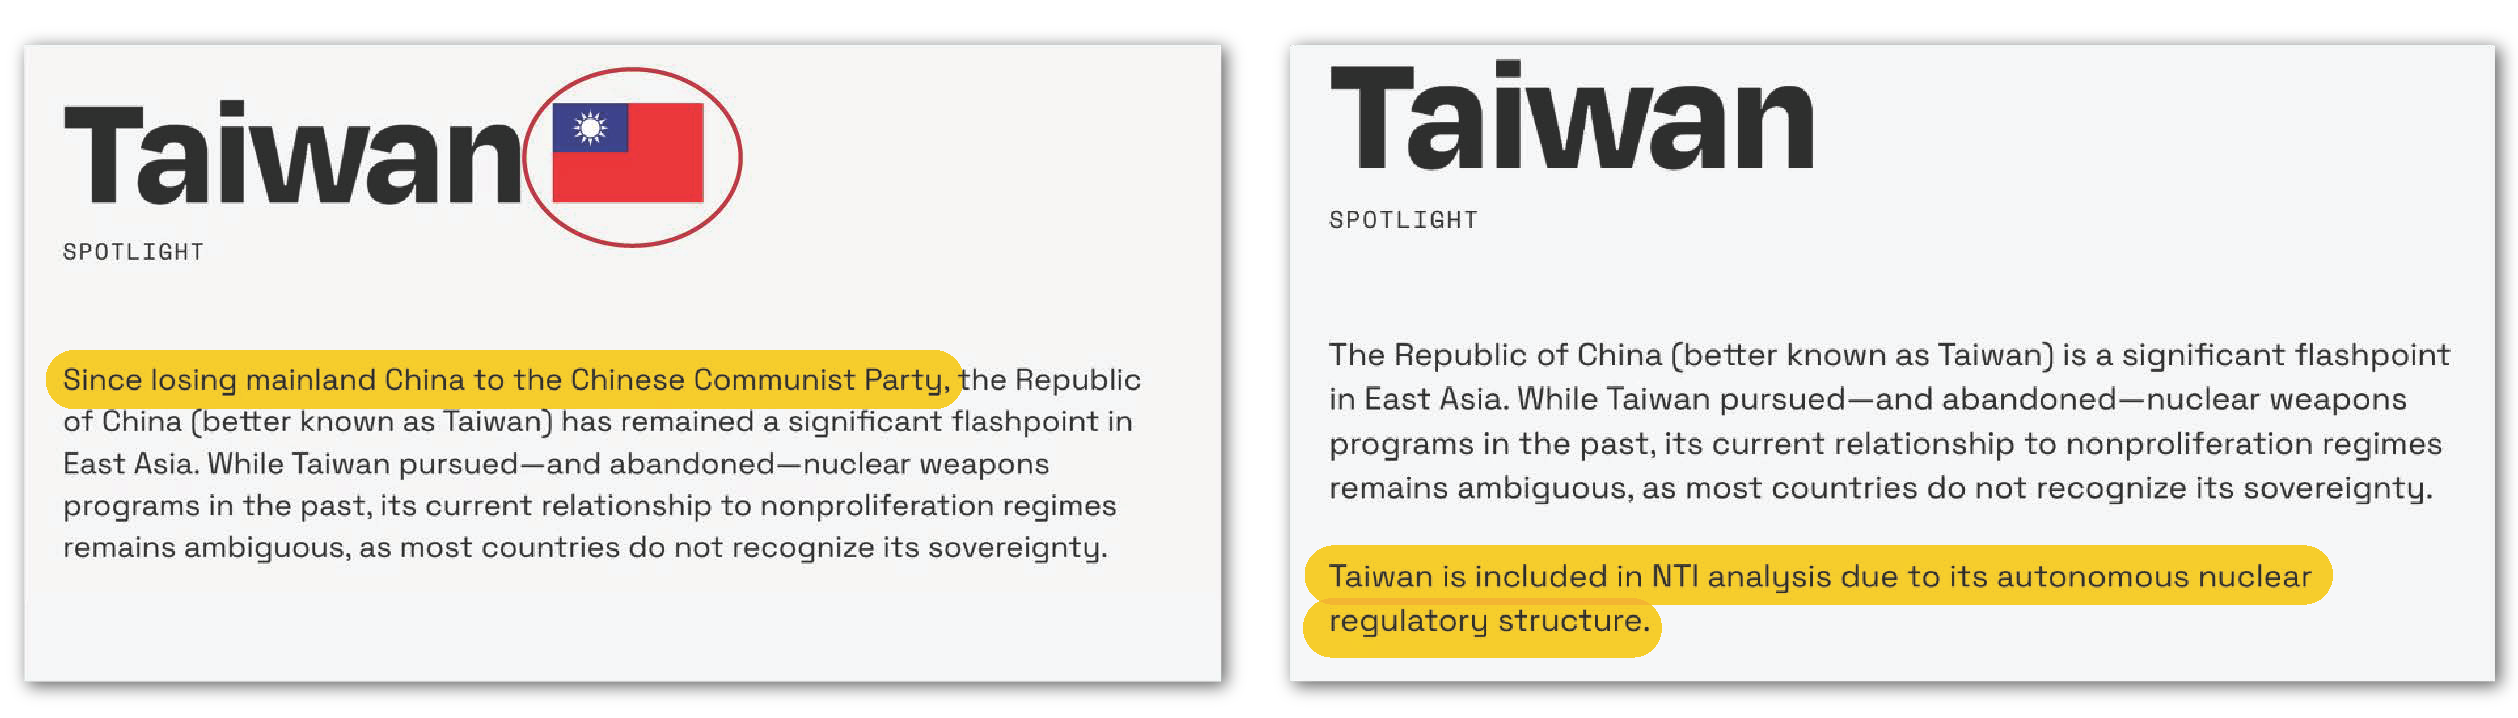 Taiwan Graphic Test 2.1 Feb 2022